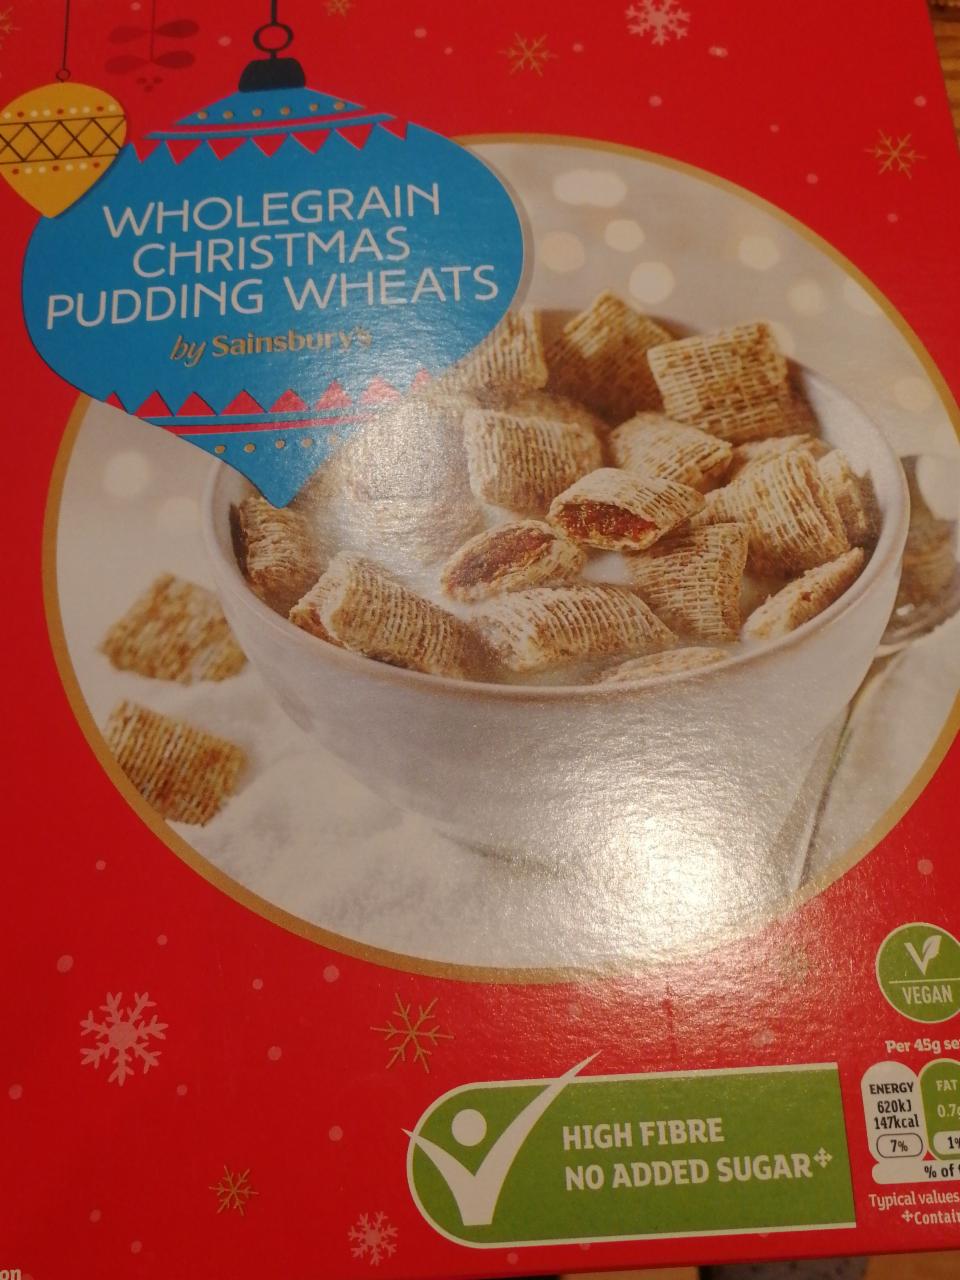 Fotografie - Wholegrain Christmas Pudding Wheats by Sainsbury's